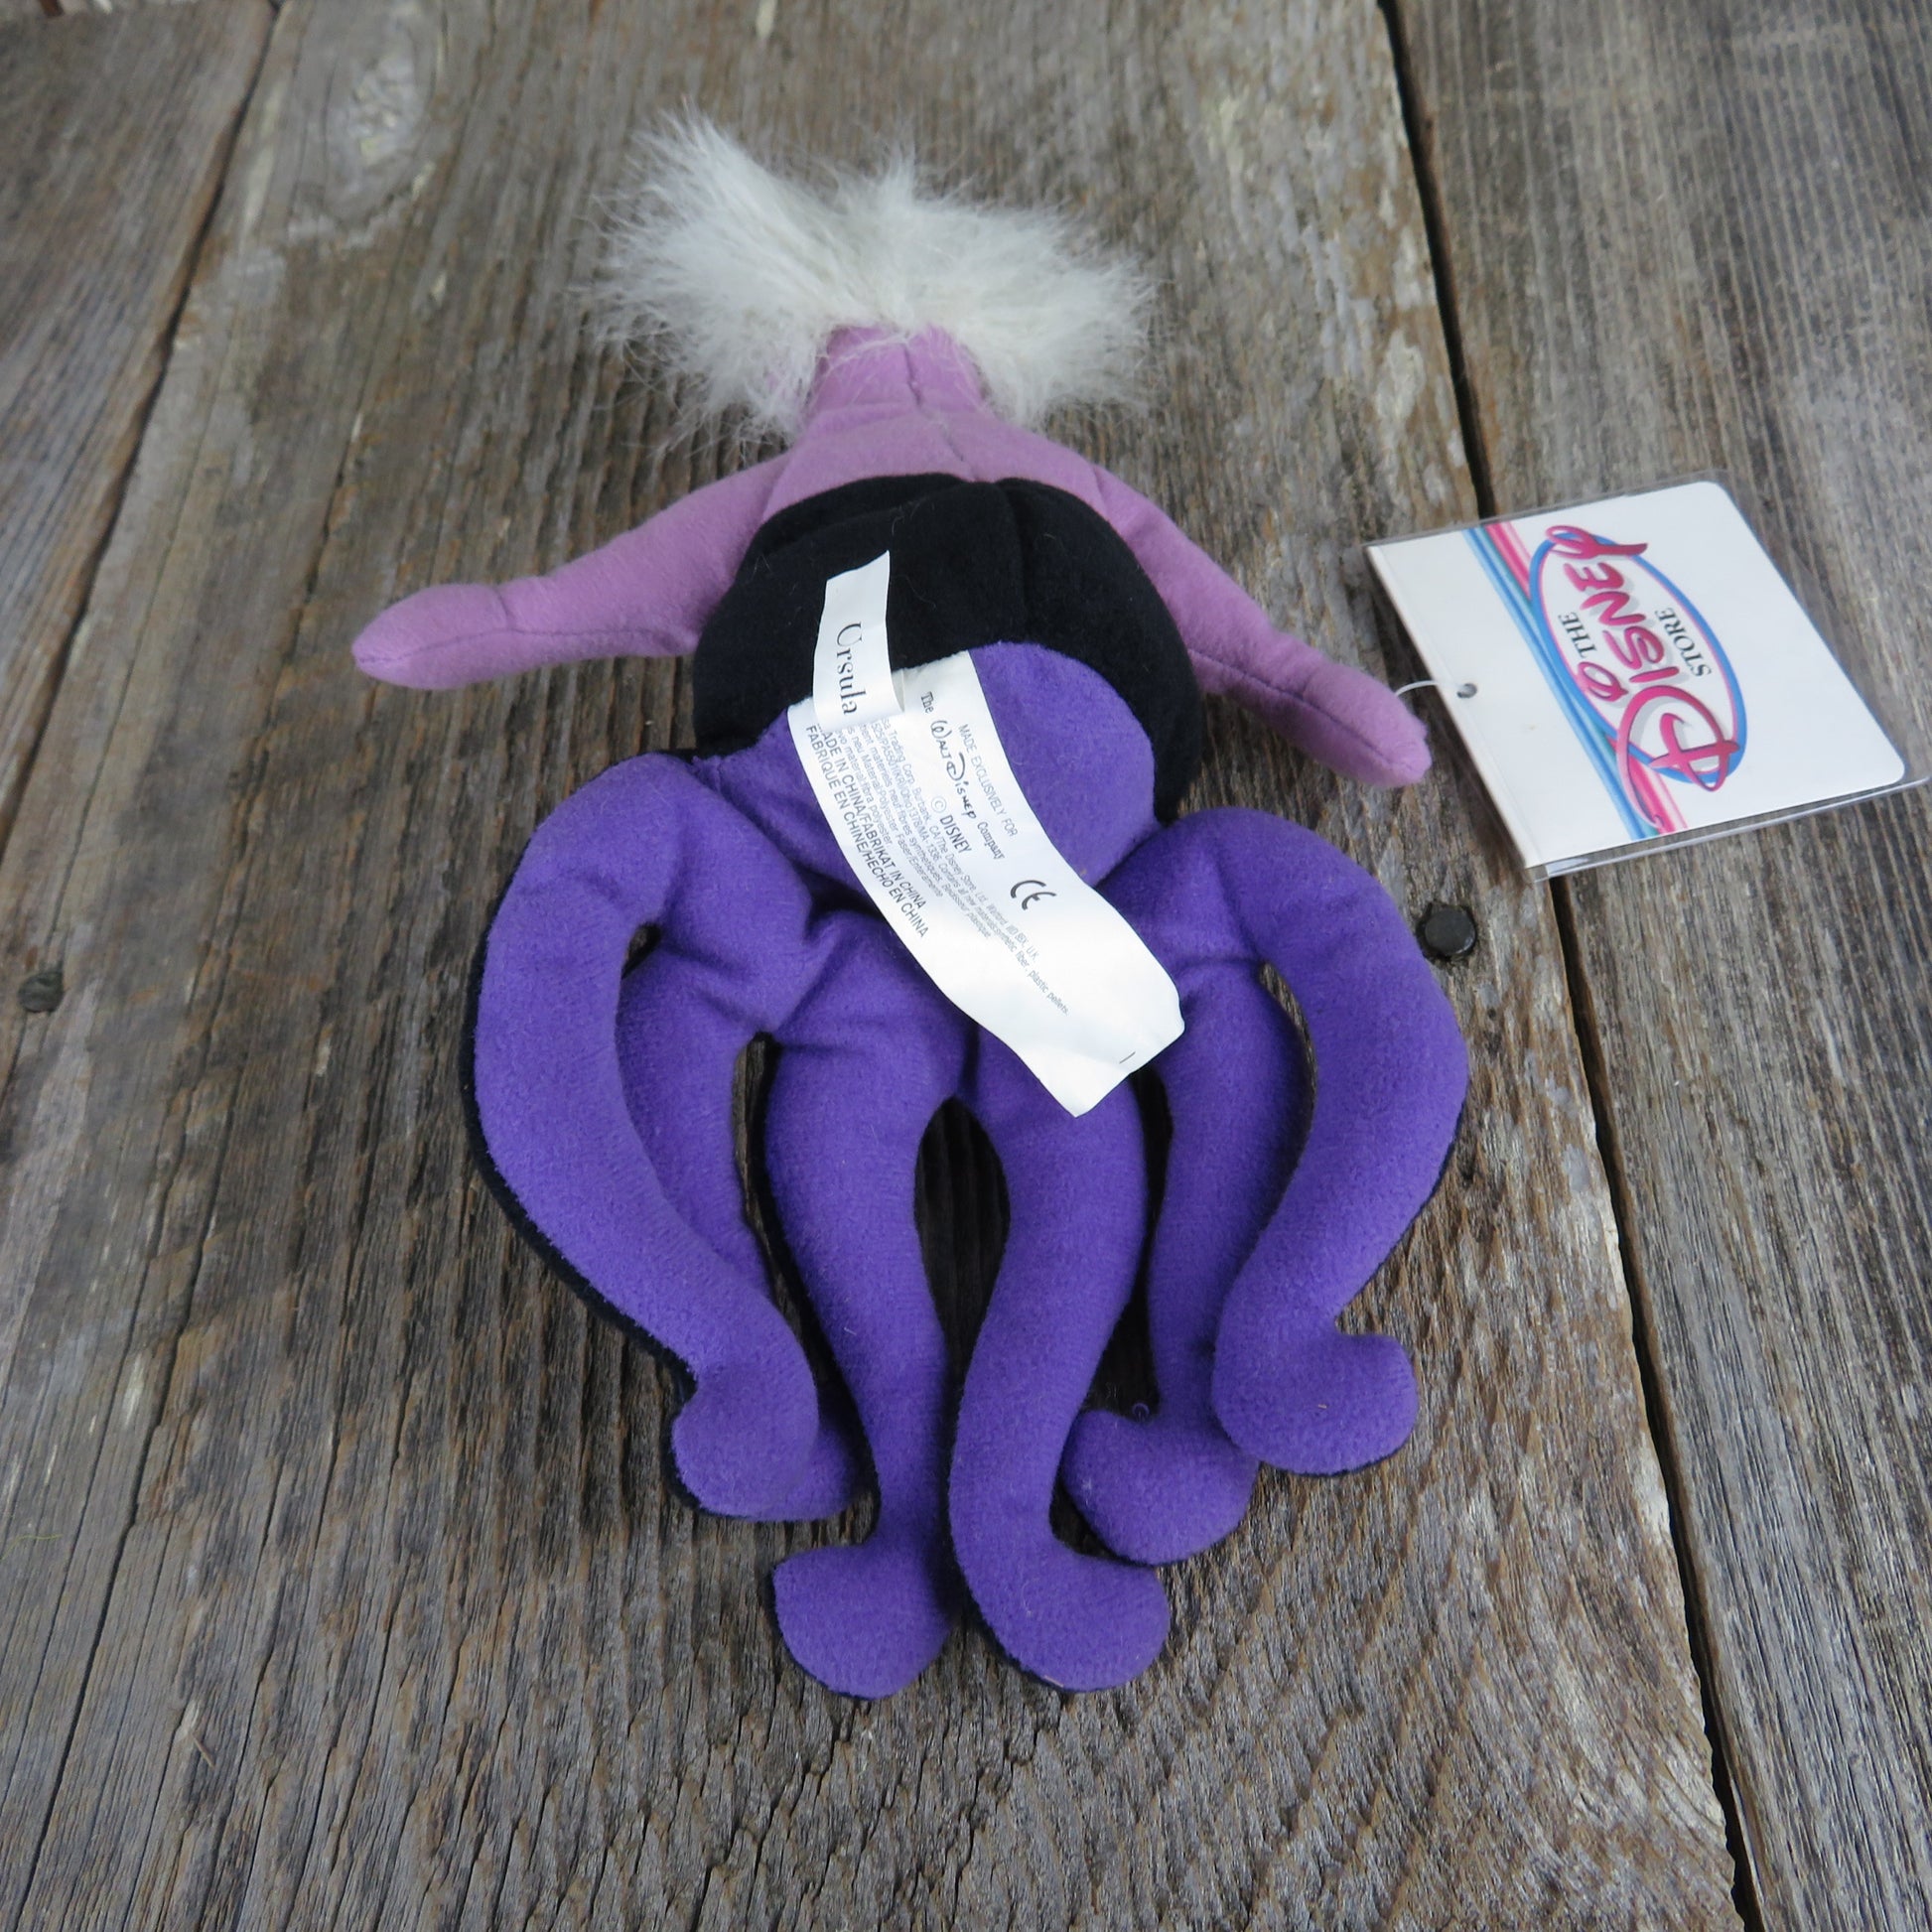 Vintage Ursula Sea Witch Plush Bean Bag Little Mermaid Disney Store Purple Beanie Stuffed Animal 1990s - At Grandma's Table